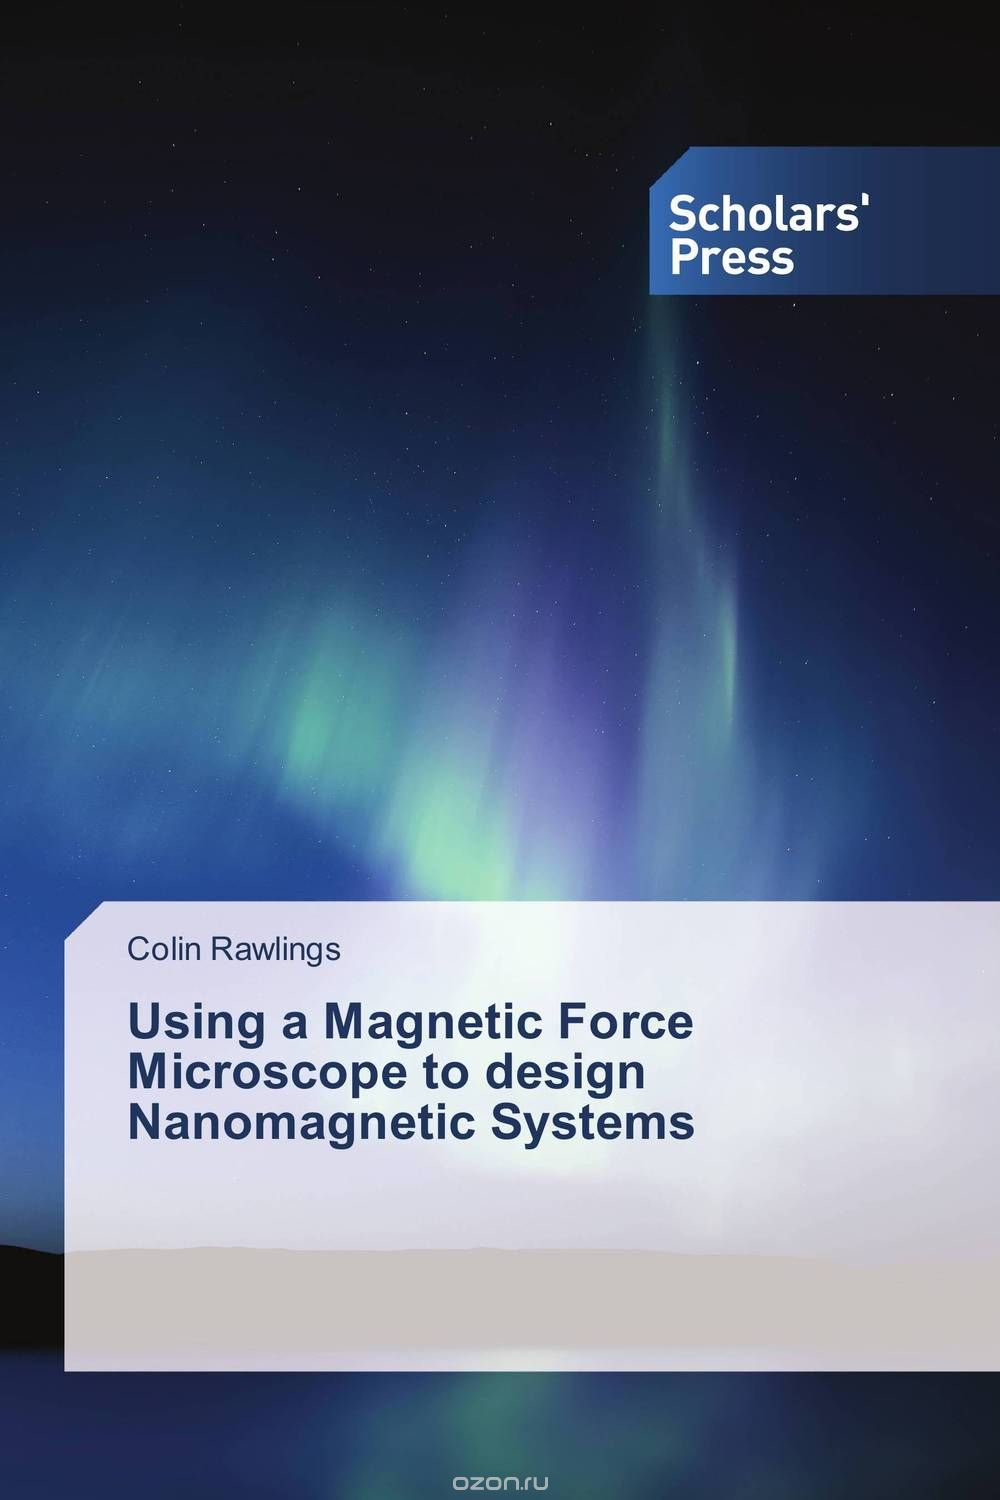 Скачать книгу "Using a Magnetic Force Microscope to design Nanomagnetic Systems"